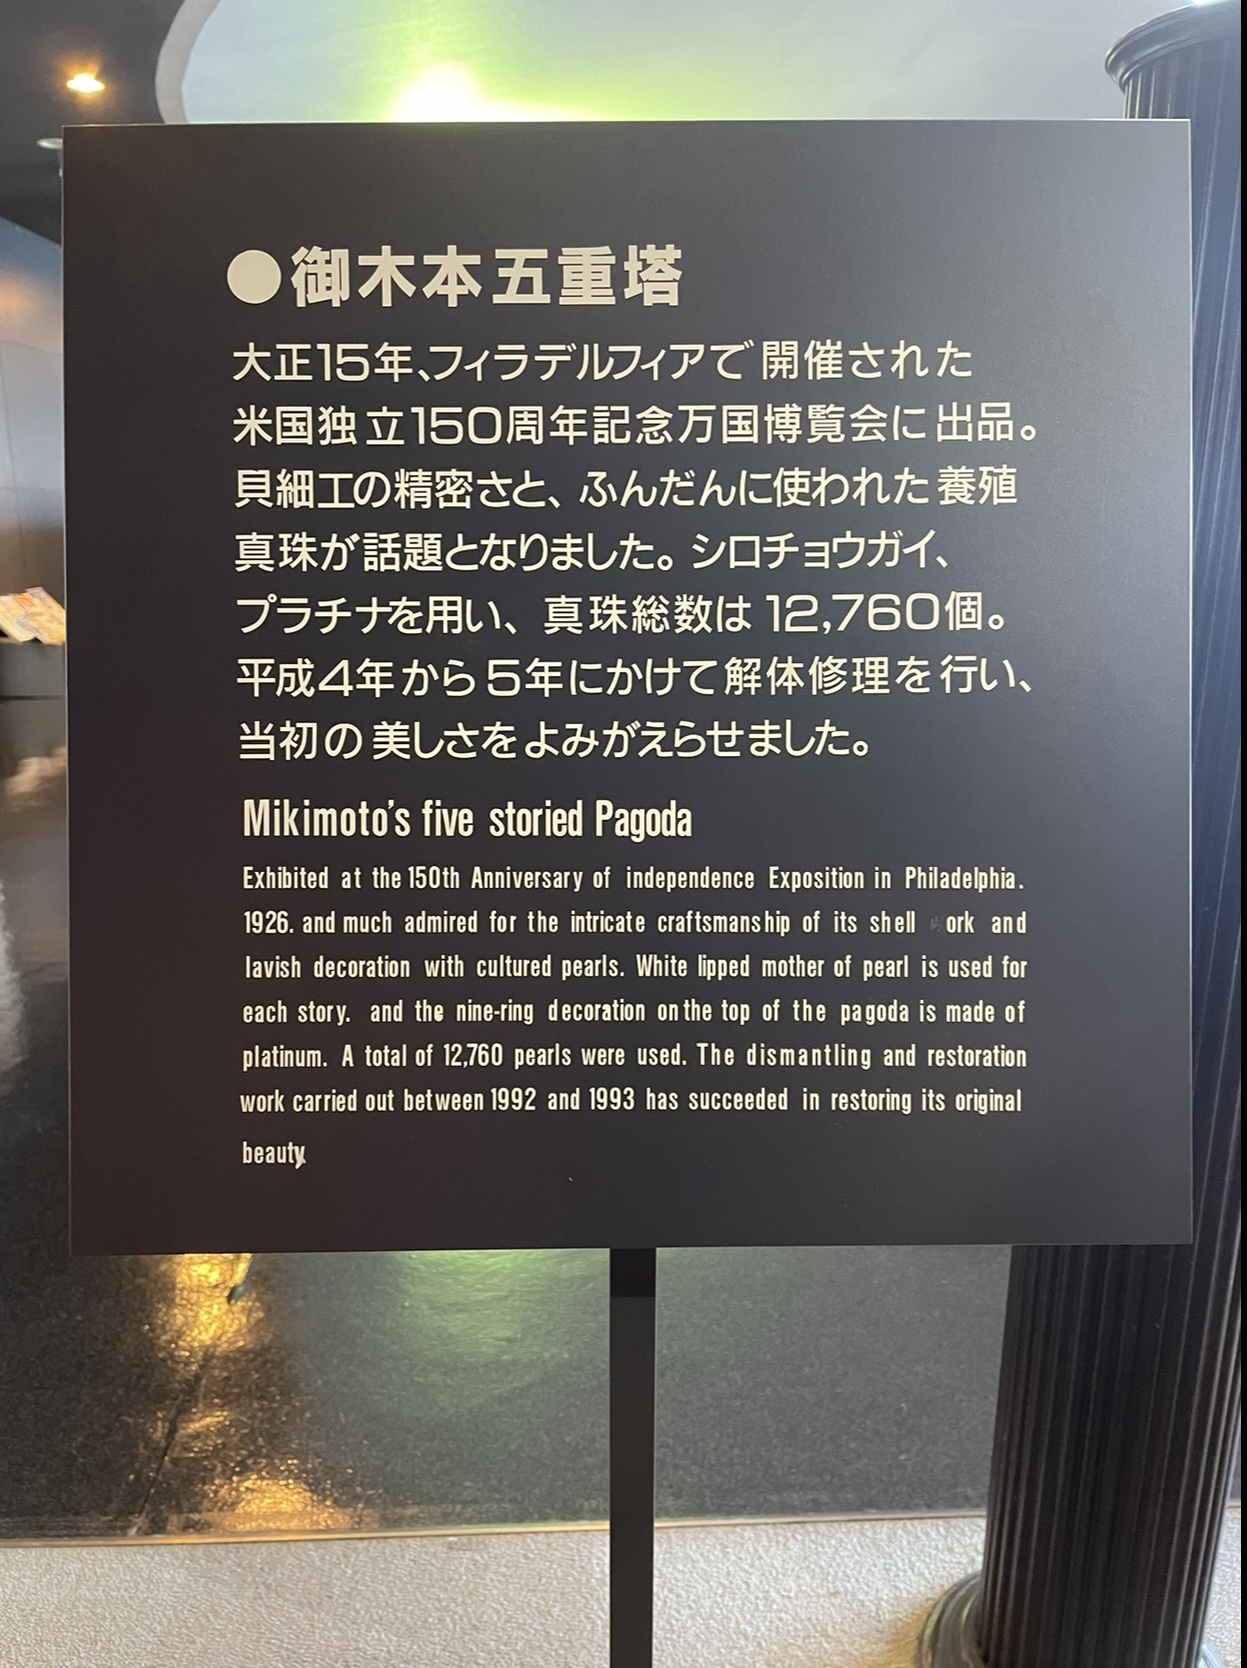 Mikimoto's five stories pearl pagoda - Mikimoto Pearl Museum